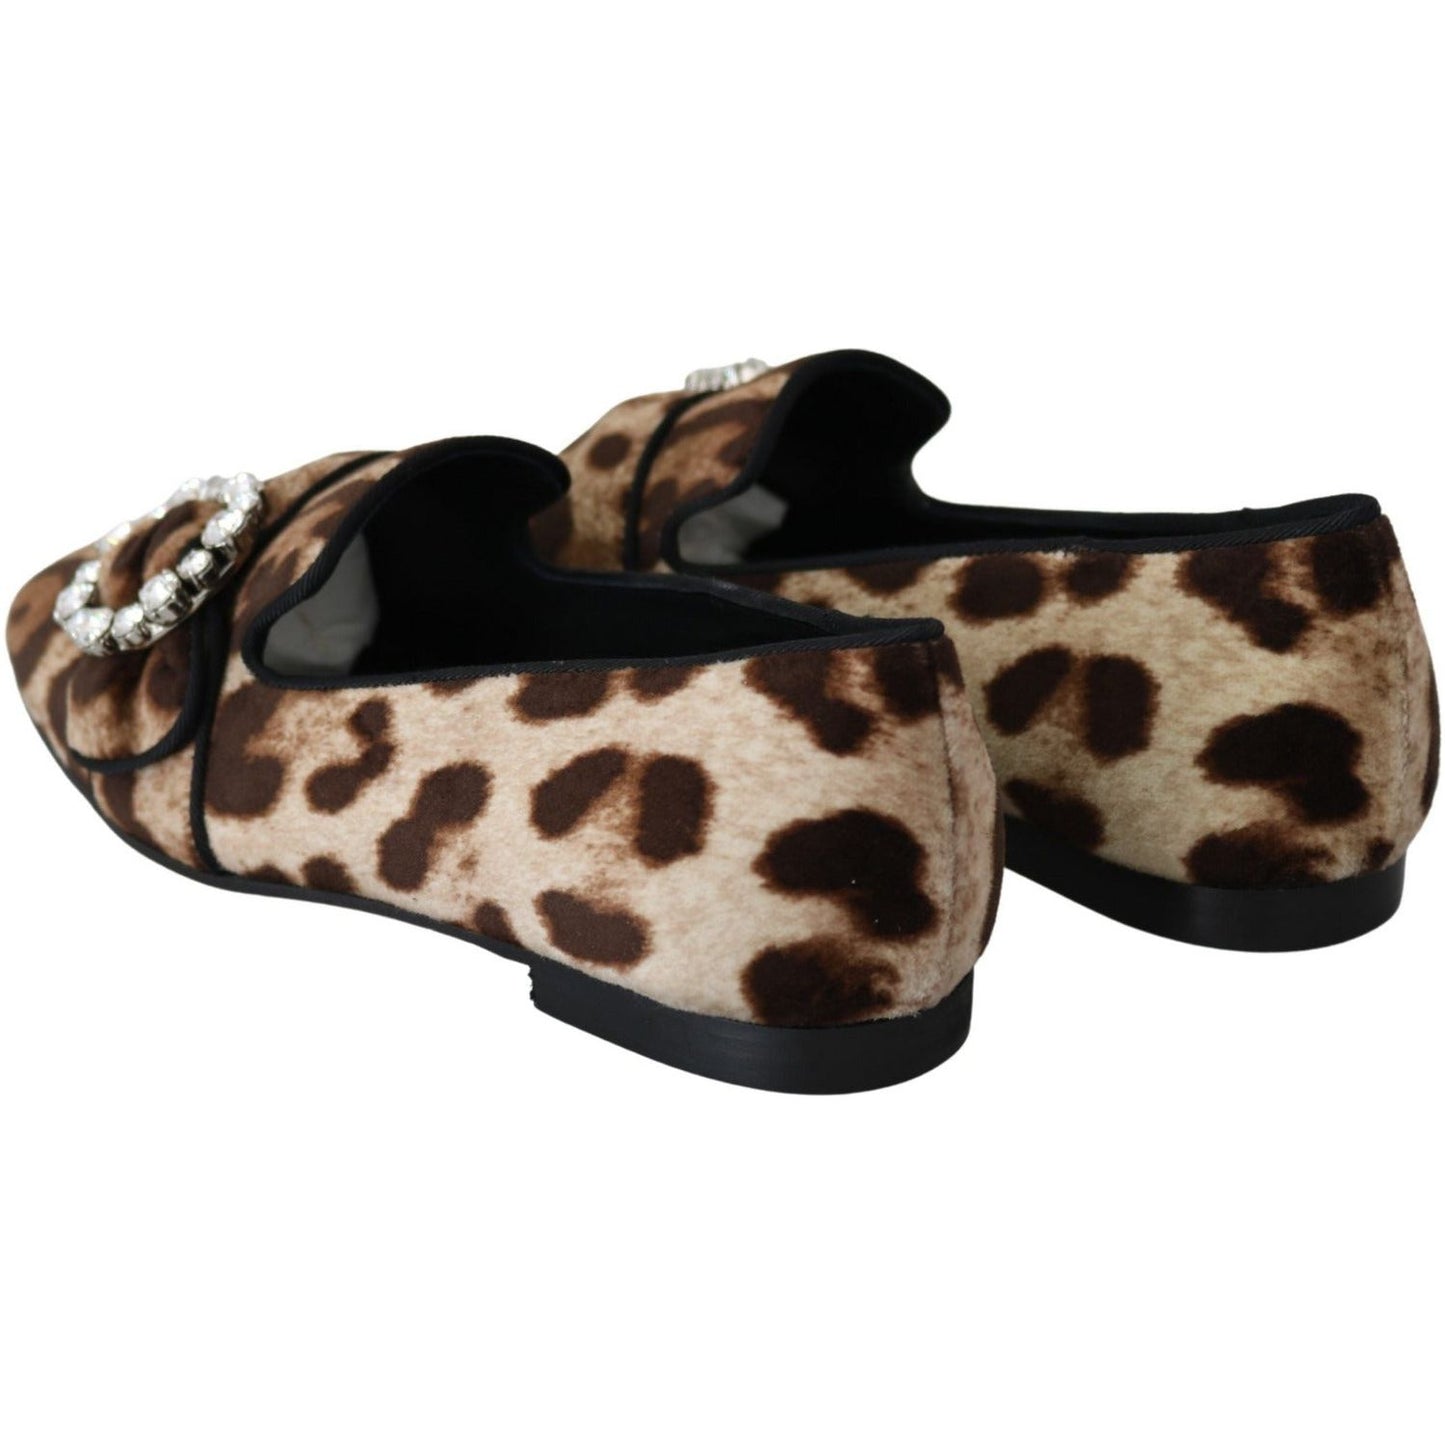 Dolce & Gabbana Leopard Print Crystal Embellished Loafers brown-leopard-print-crystals-loafers-flats-shoes IMG_9968-scaled-d5e5222a-31e.jpg